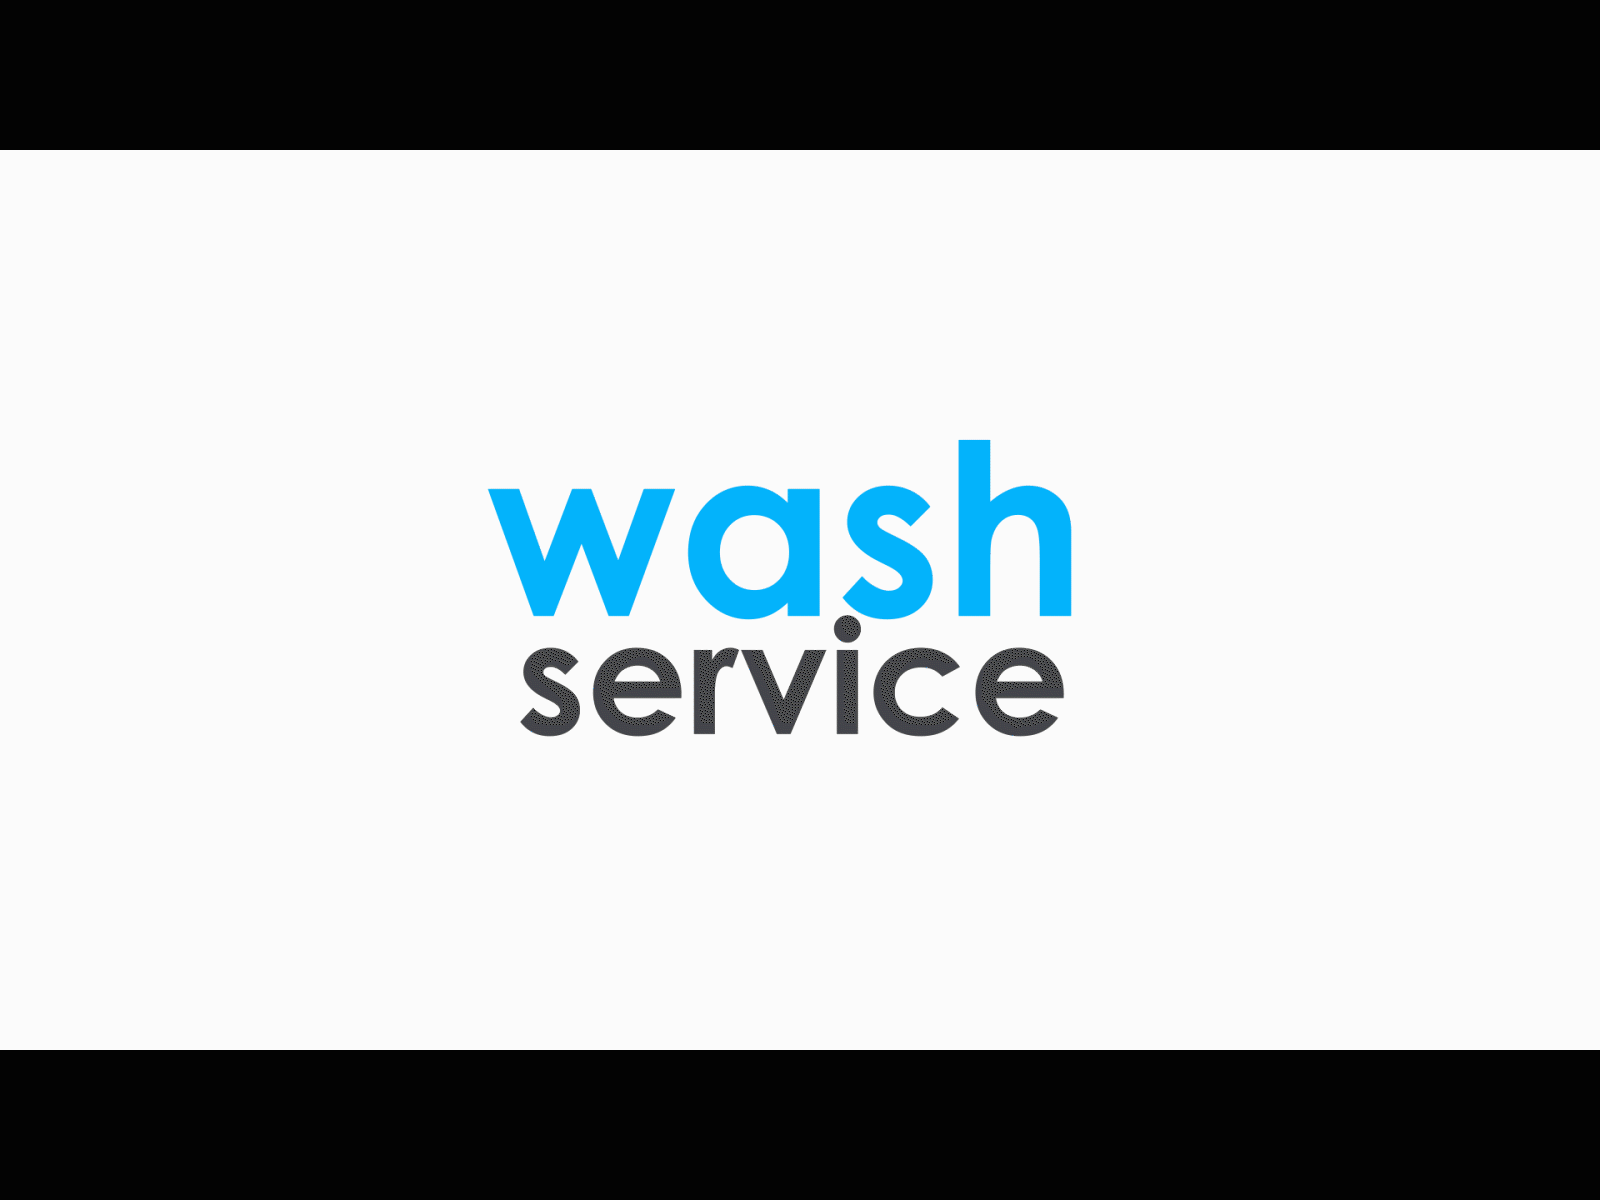 Car washing service logo 2d animation animation car intro logo logo animation service wash